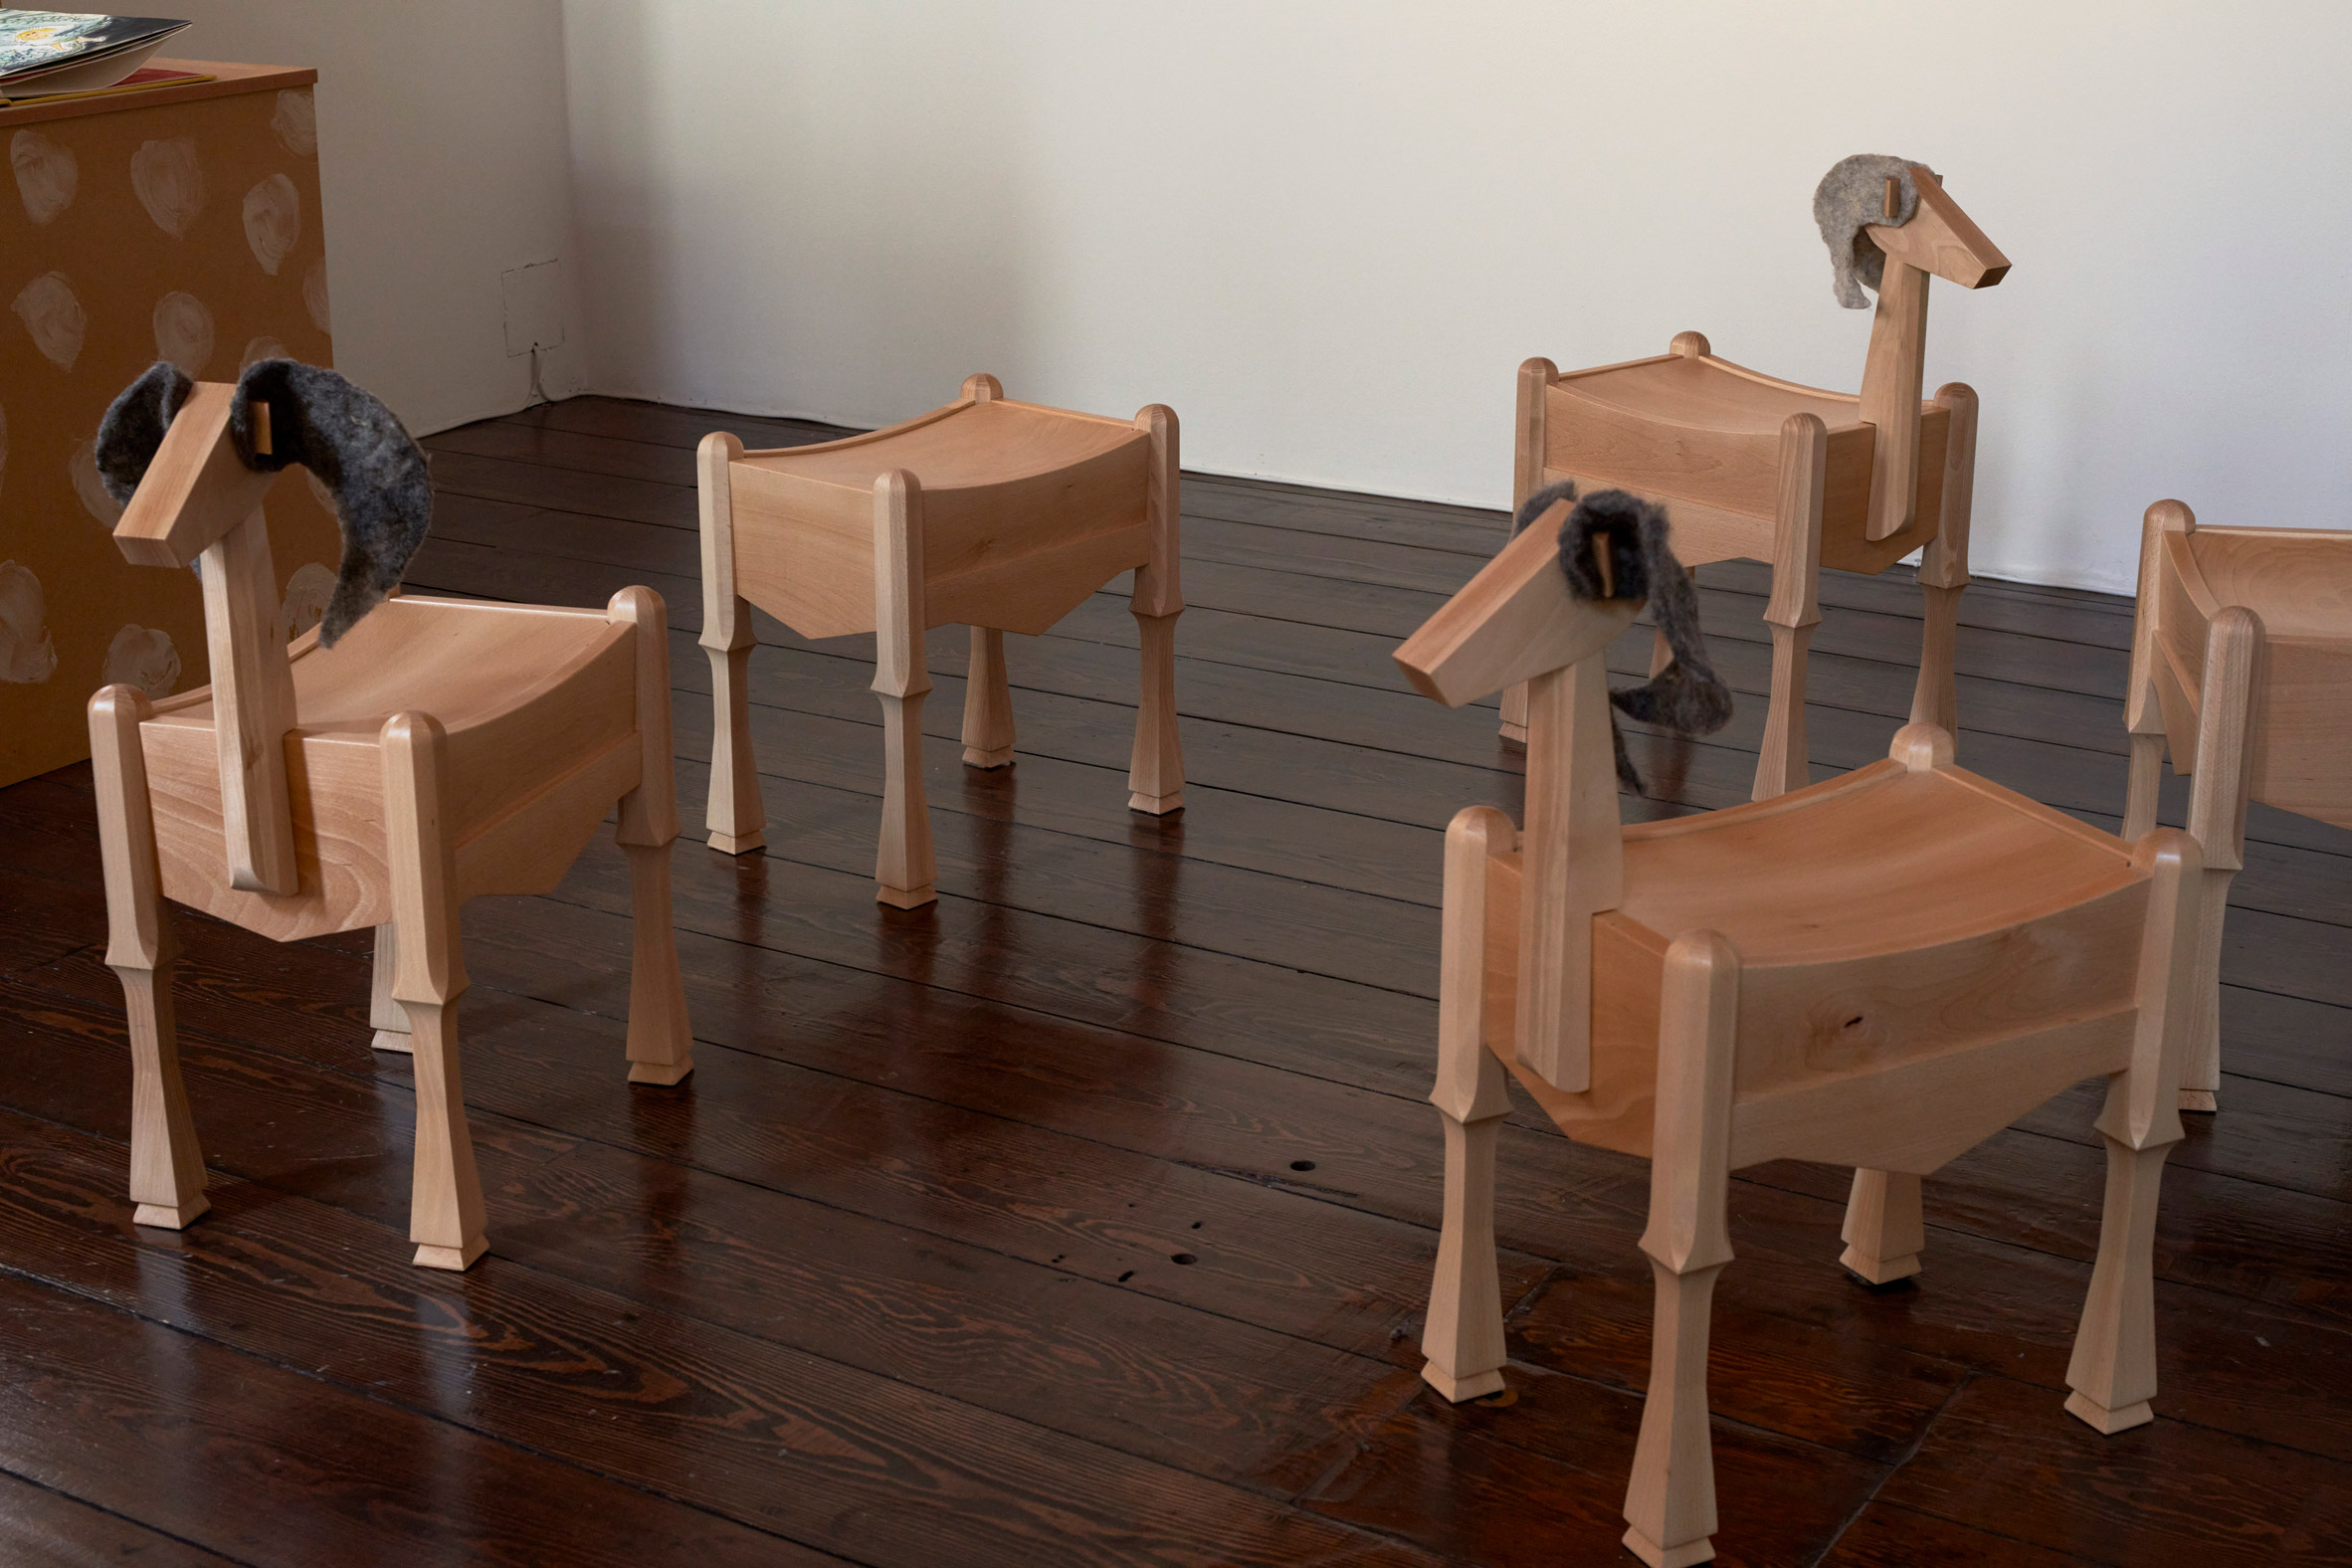 Sheep-shaped chairs